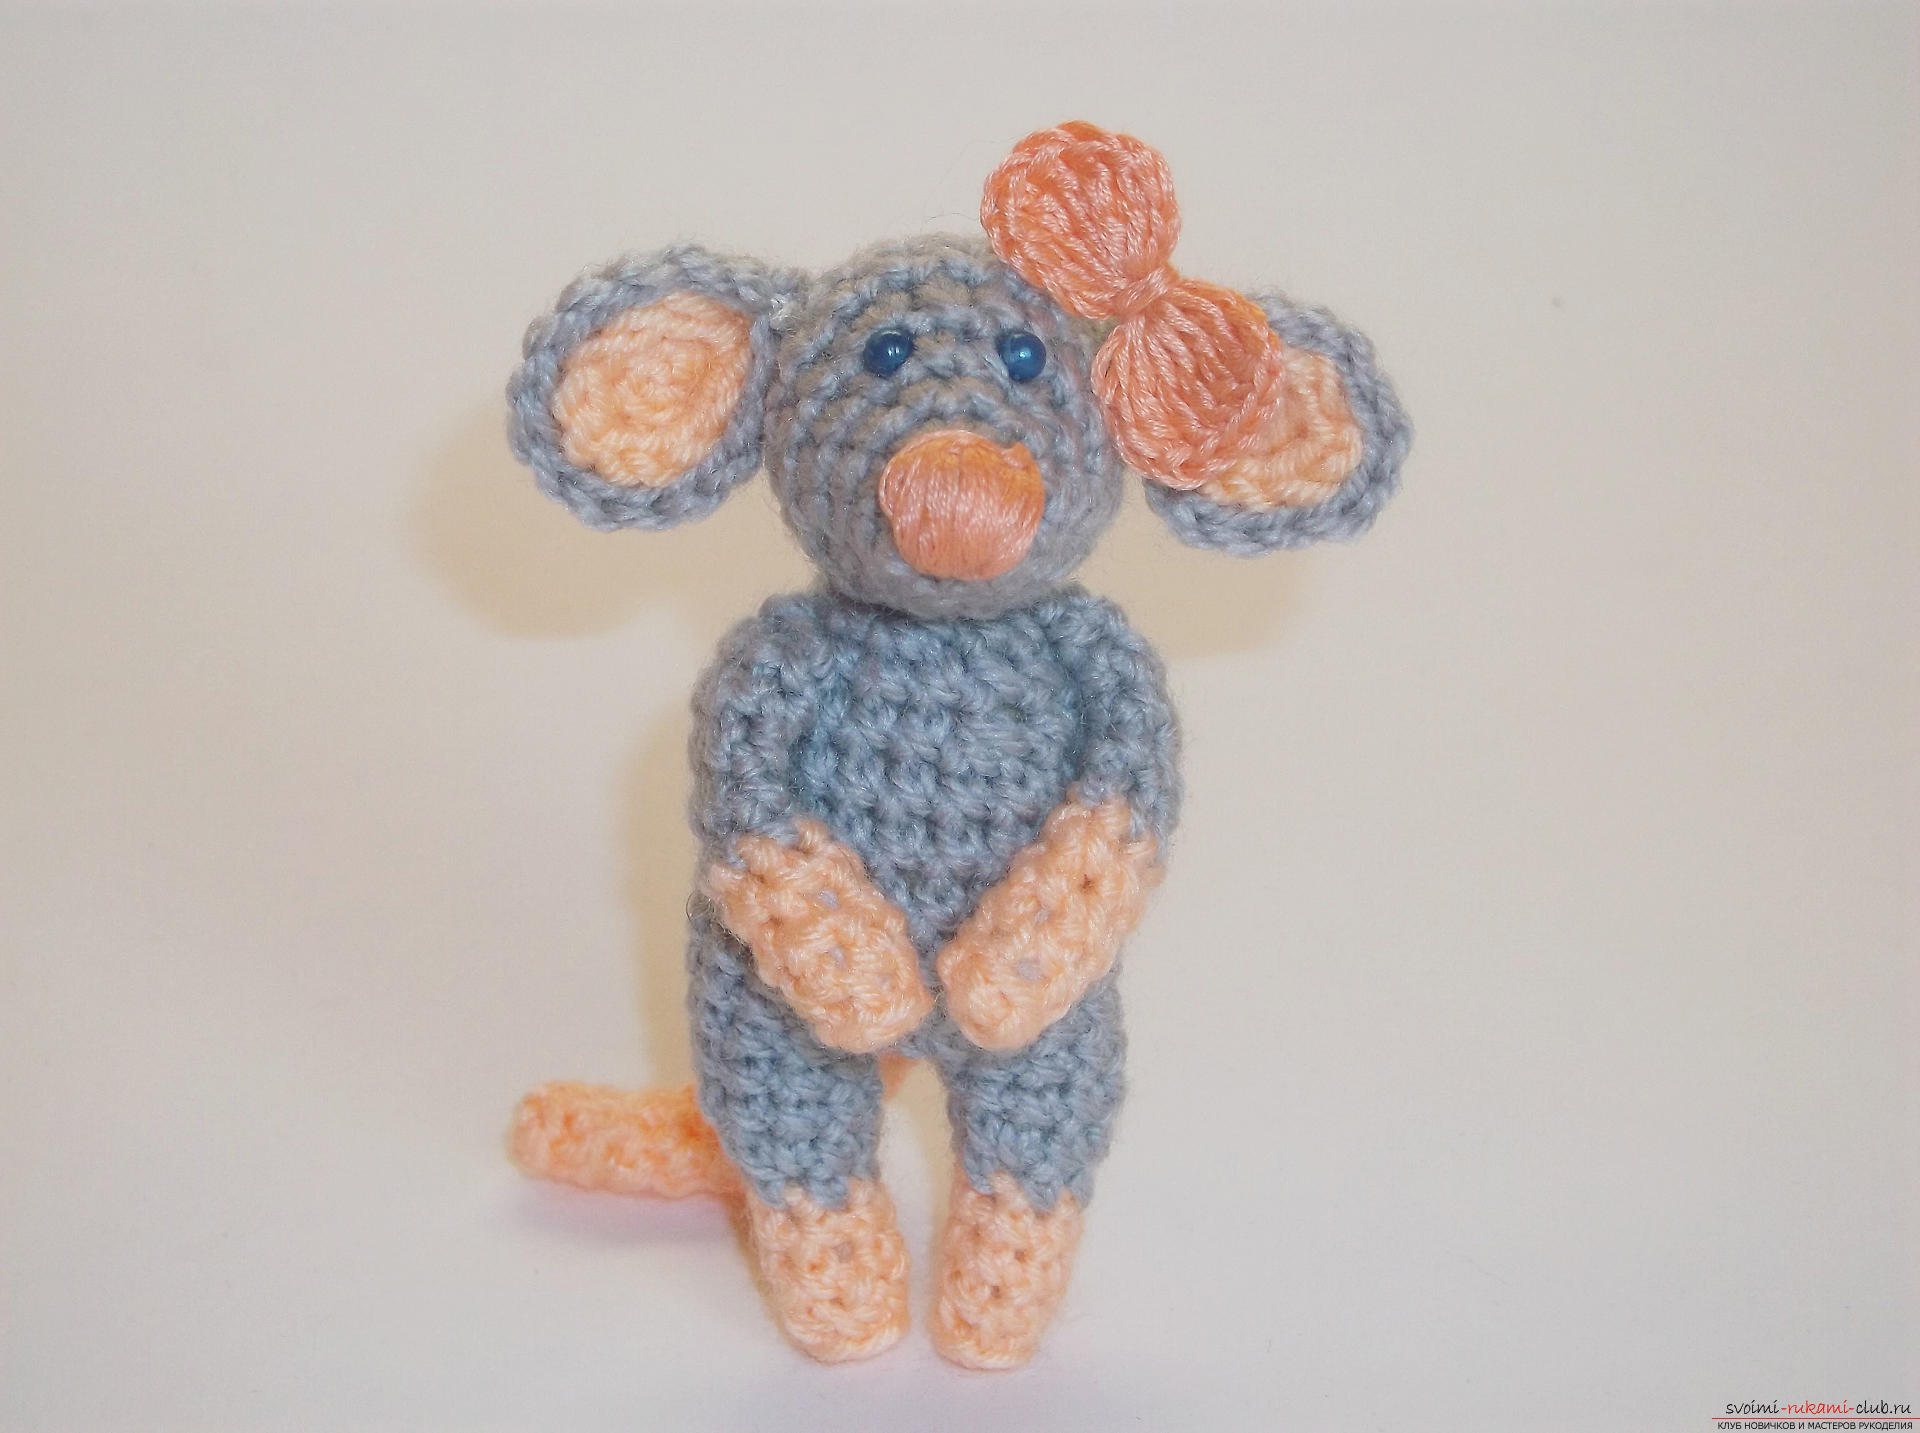 Photos for a lesson on crochet toys 